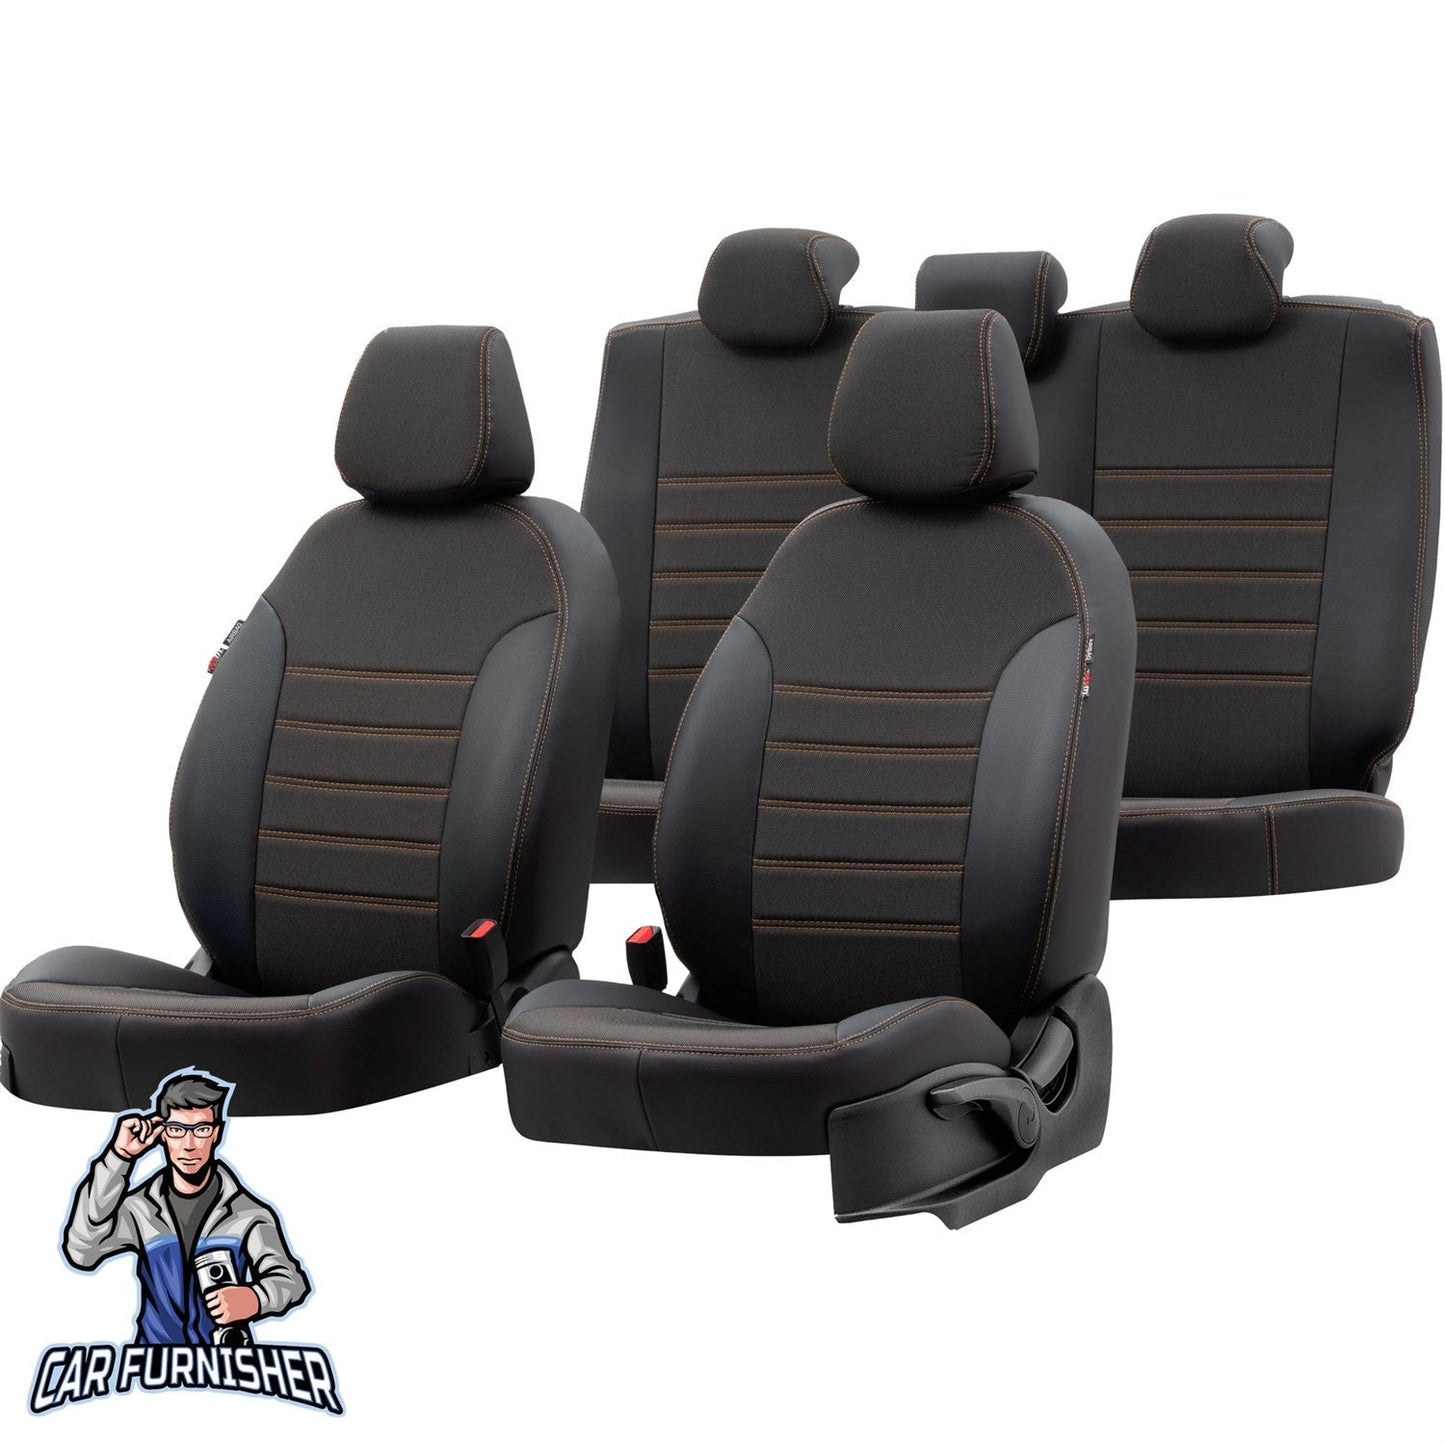 Fiat Linea Seat Covers Paris Leather & Jacquard Design Dark Beige Leather & Jacquard Fabric